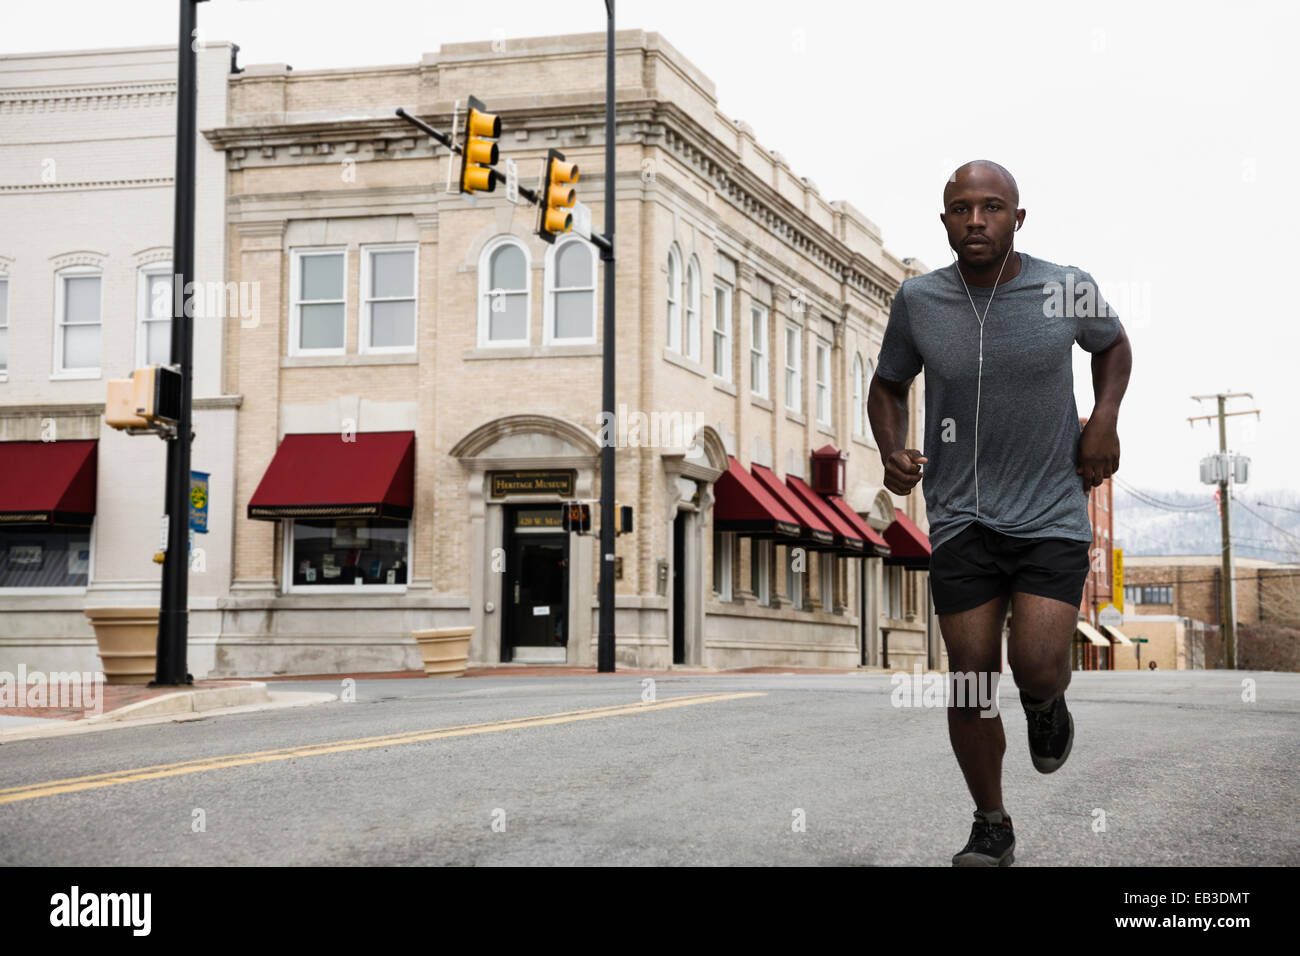 Black man running on city street Banque D'Images